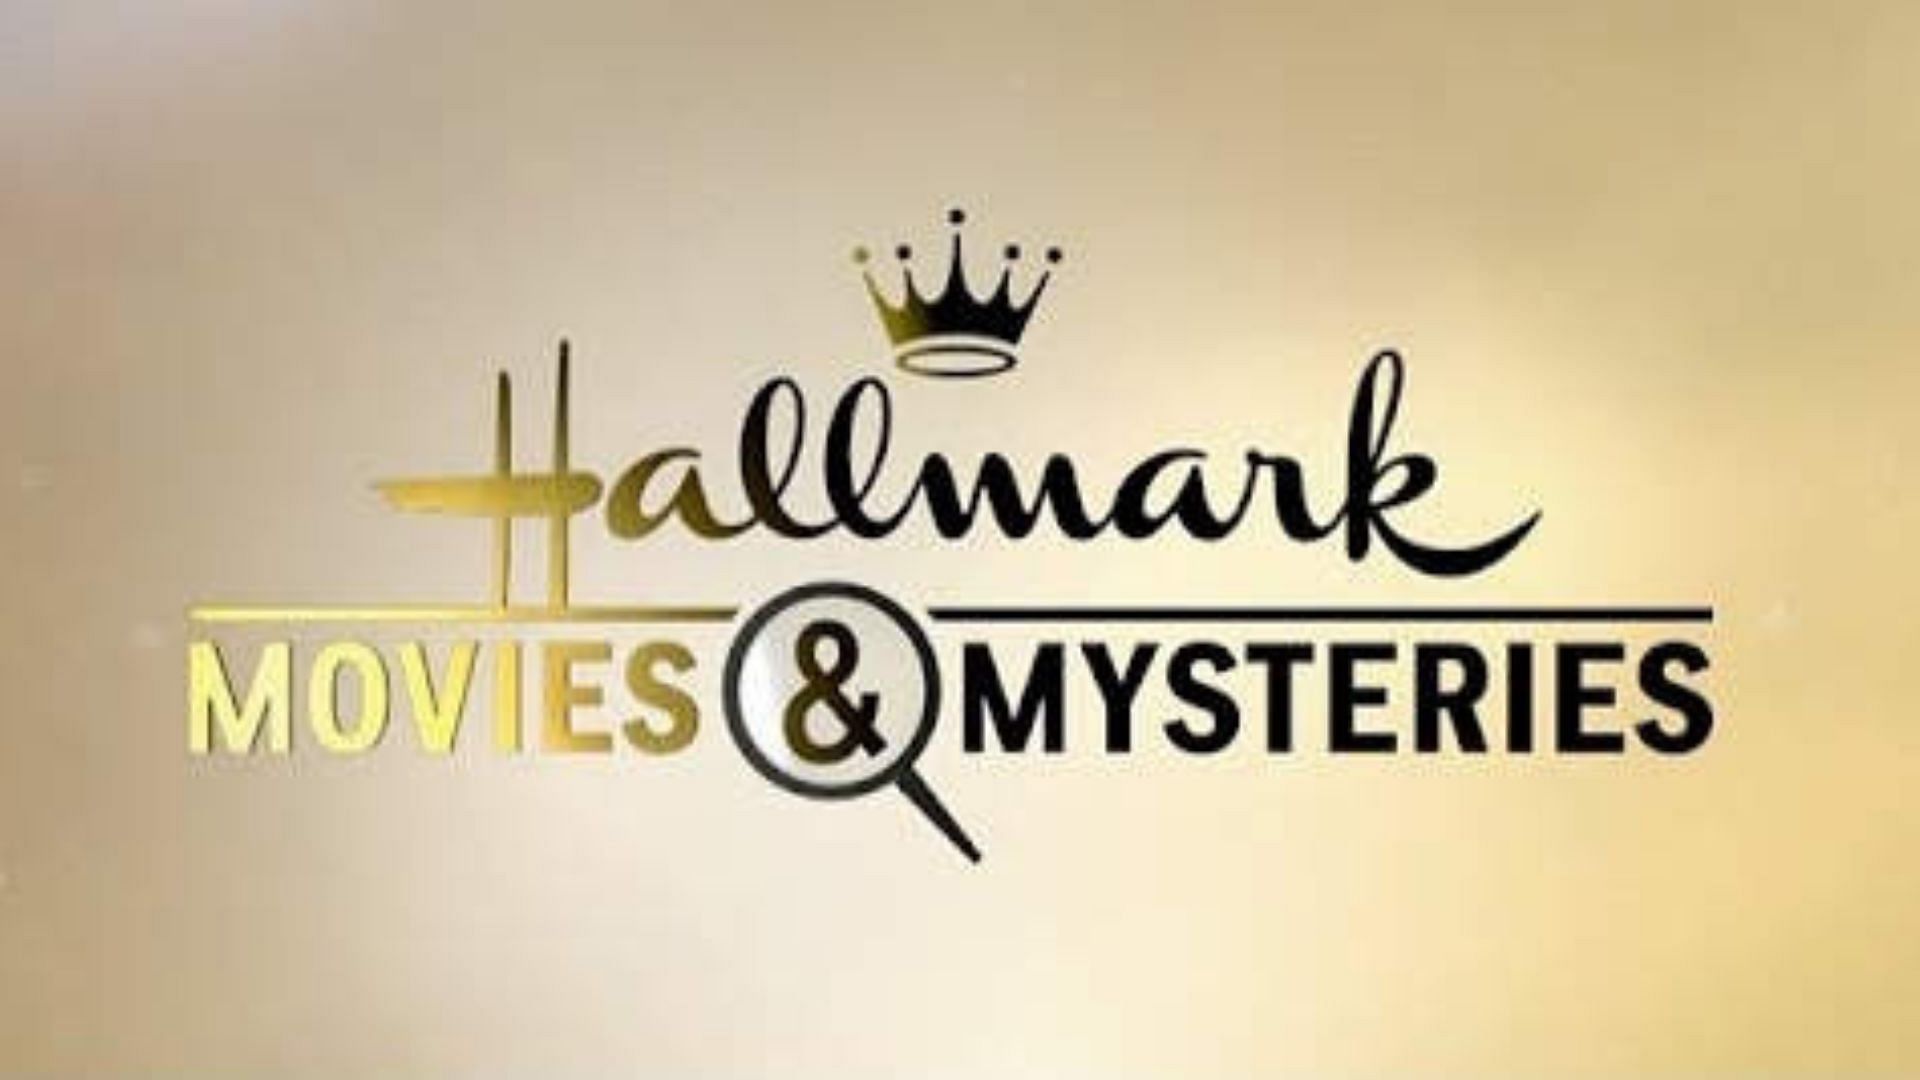 Hallmark Movies &amp; Mysteries (Image via Morty